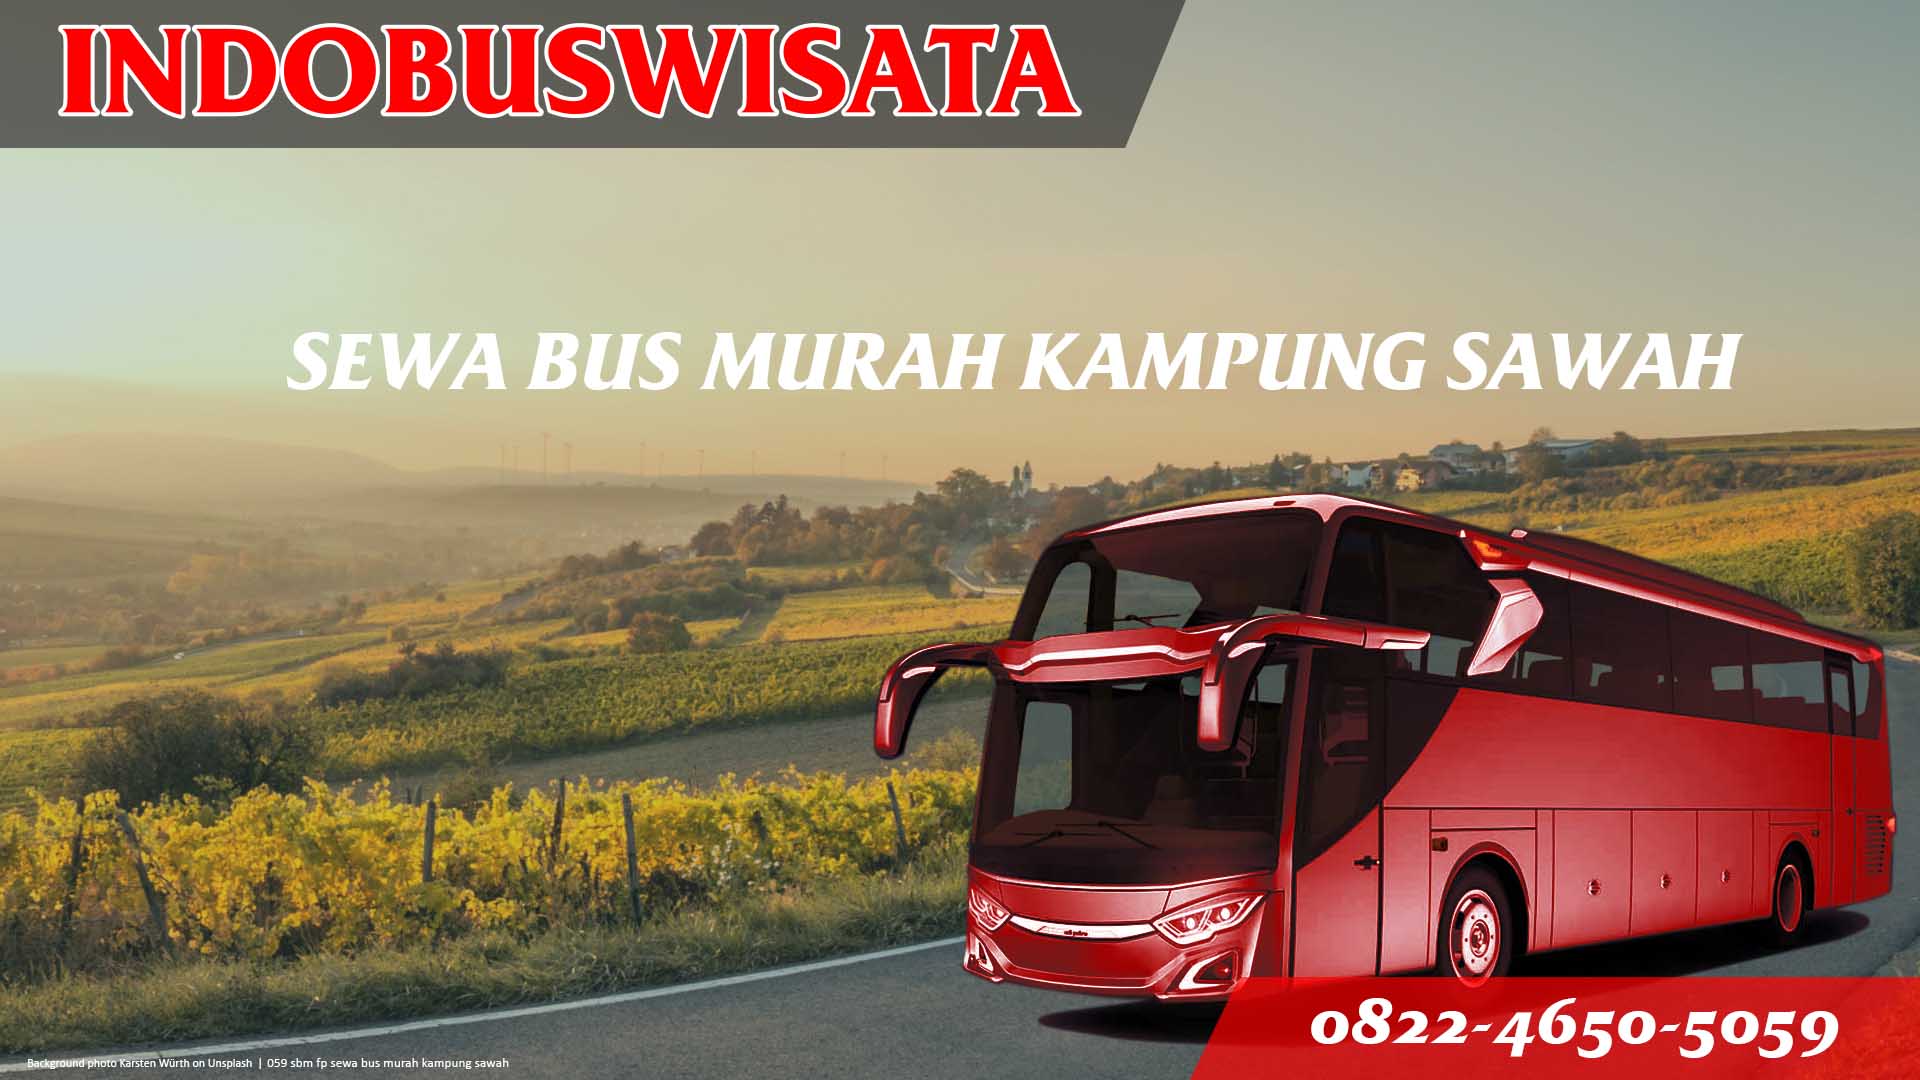 059 Sbm Fp Sewa Bus Murah Kampung Sawah Jb 3 Hdd Indobuswisata